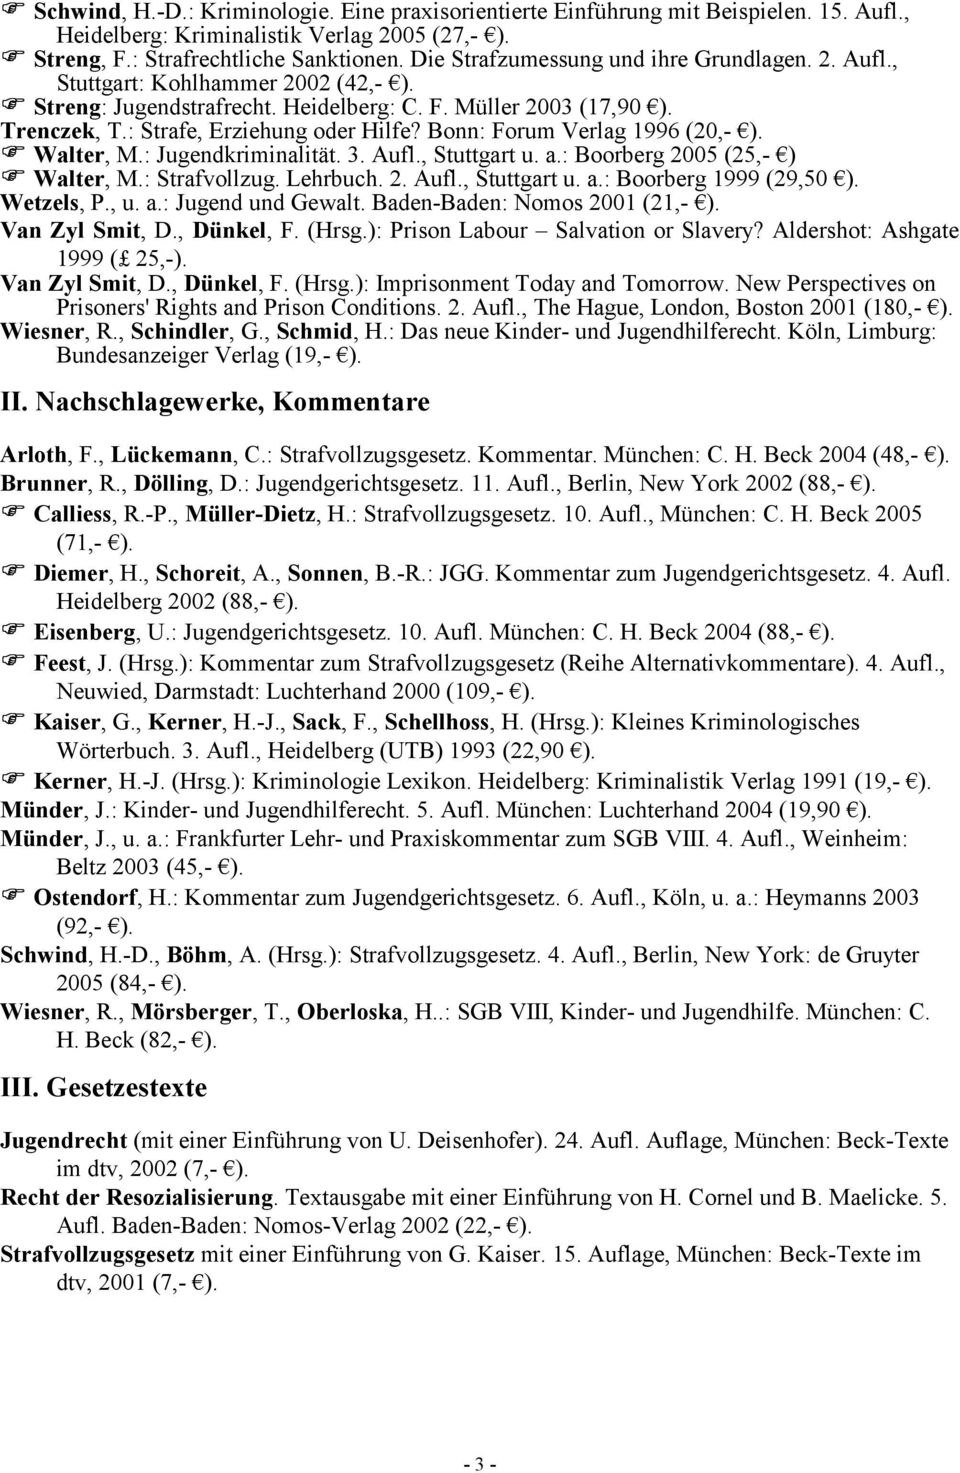 Bonn: Forum Verlag 1996 (20,-! Walter, M.: Jugendkriminalität. 3. Aufl., Stuttgart u. a.: Boorberg 2005 (25,- )! Walter, M.: Strafvollzug. Lehrbuch. 2. Aufl., Stuttgart u. a.: Boorberg 1999 (29,50 Wetzels, P.